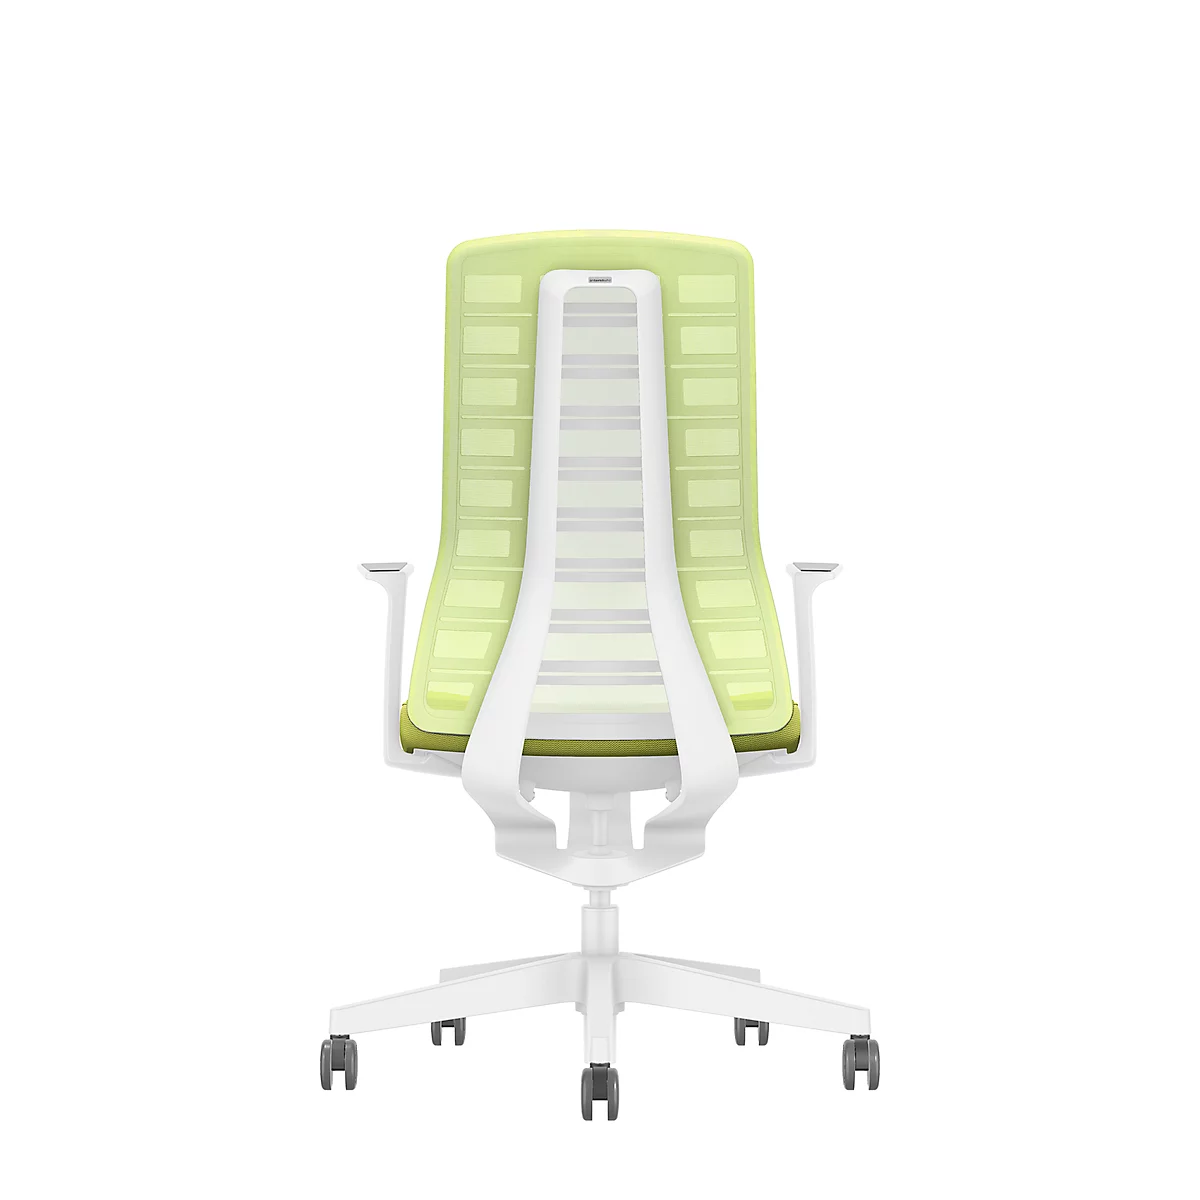 Interstuhl bureaustoel PUREis3, vaste armleuningen, 3D auto-synchroonmechanisme, kuipzitting, gazen rugleuning, meigroen/wit